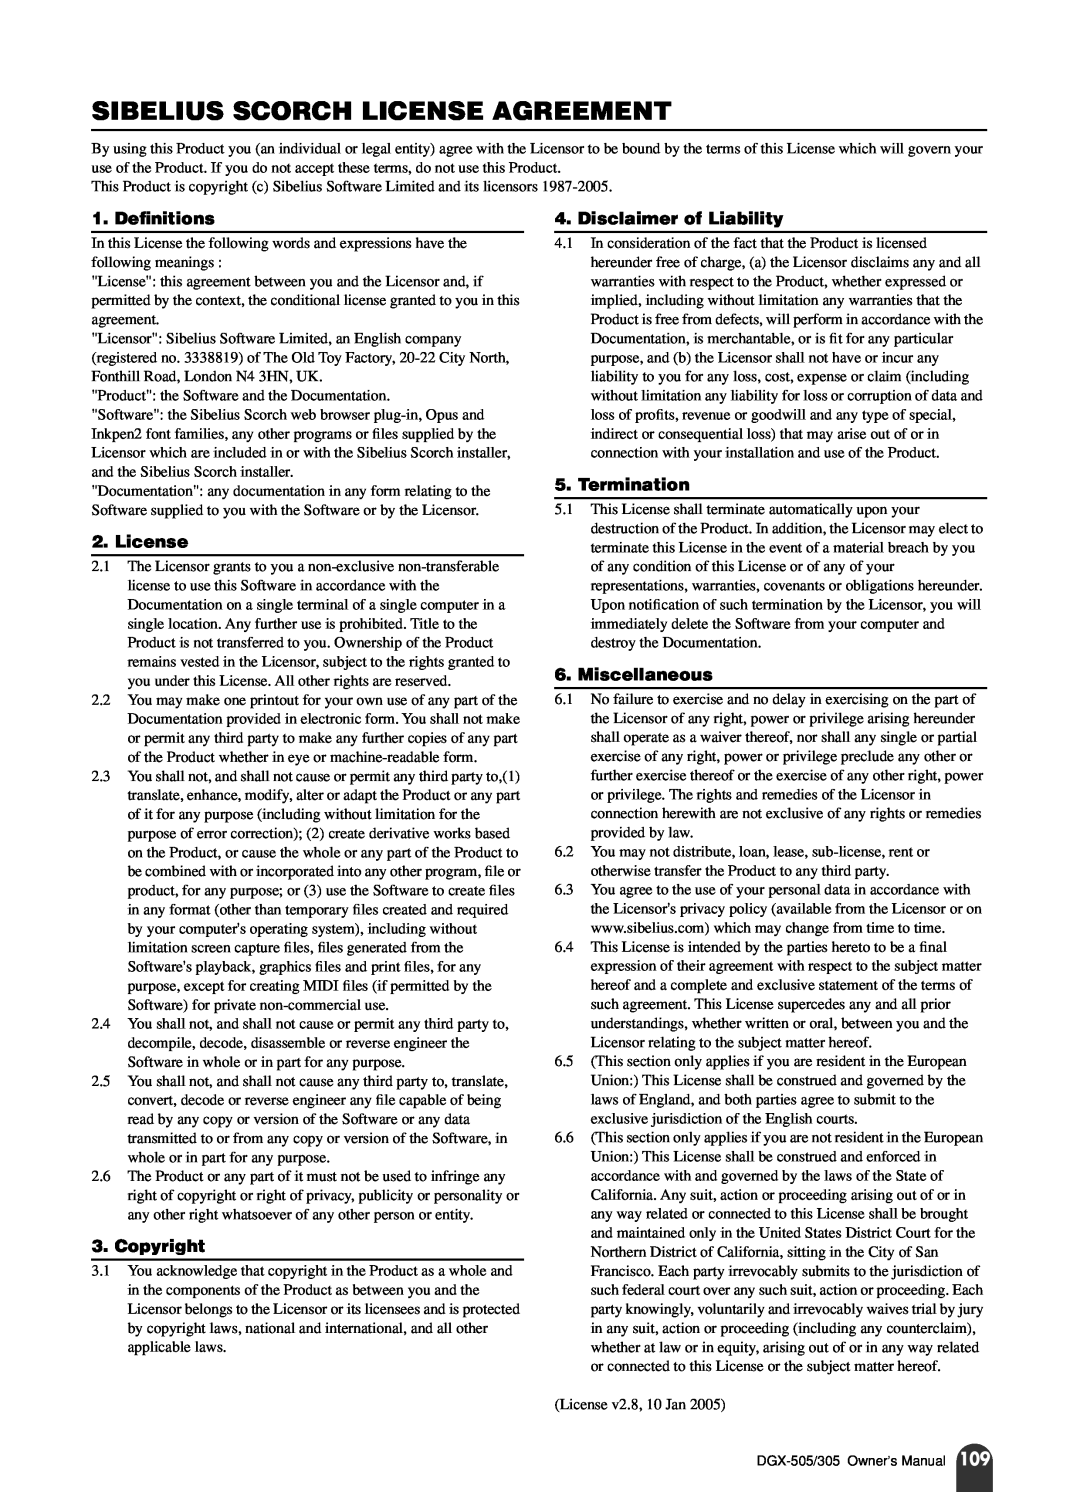 Yamaha DGX-305, DGX-505 Sibelius Scorch License Agreement, 1. Deﬁnitions, Copyright, Disclaimer of Liability, Termination 